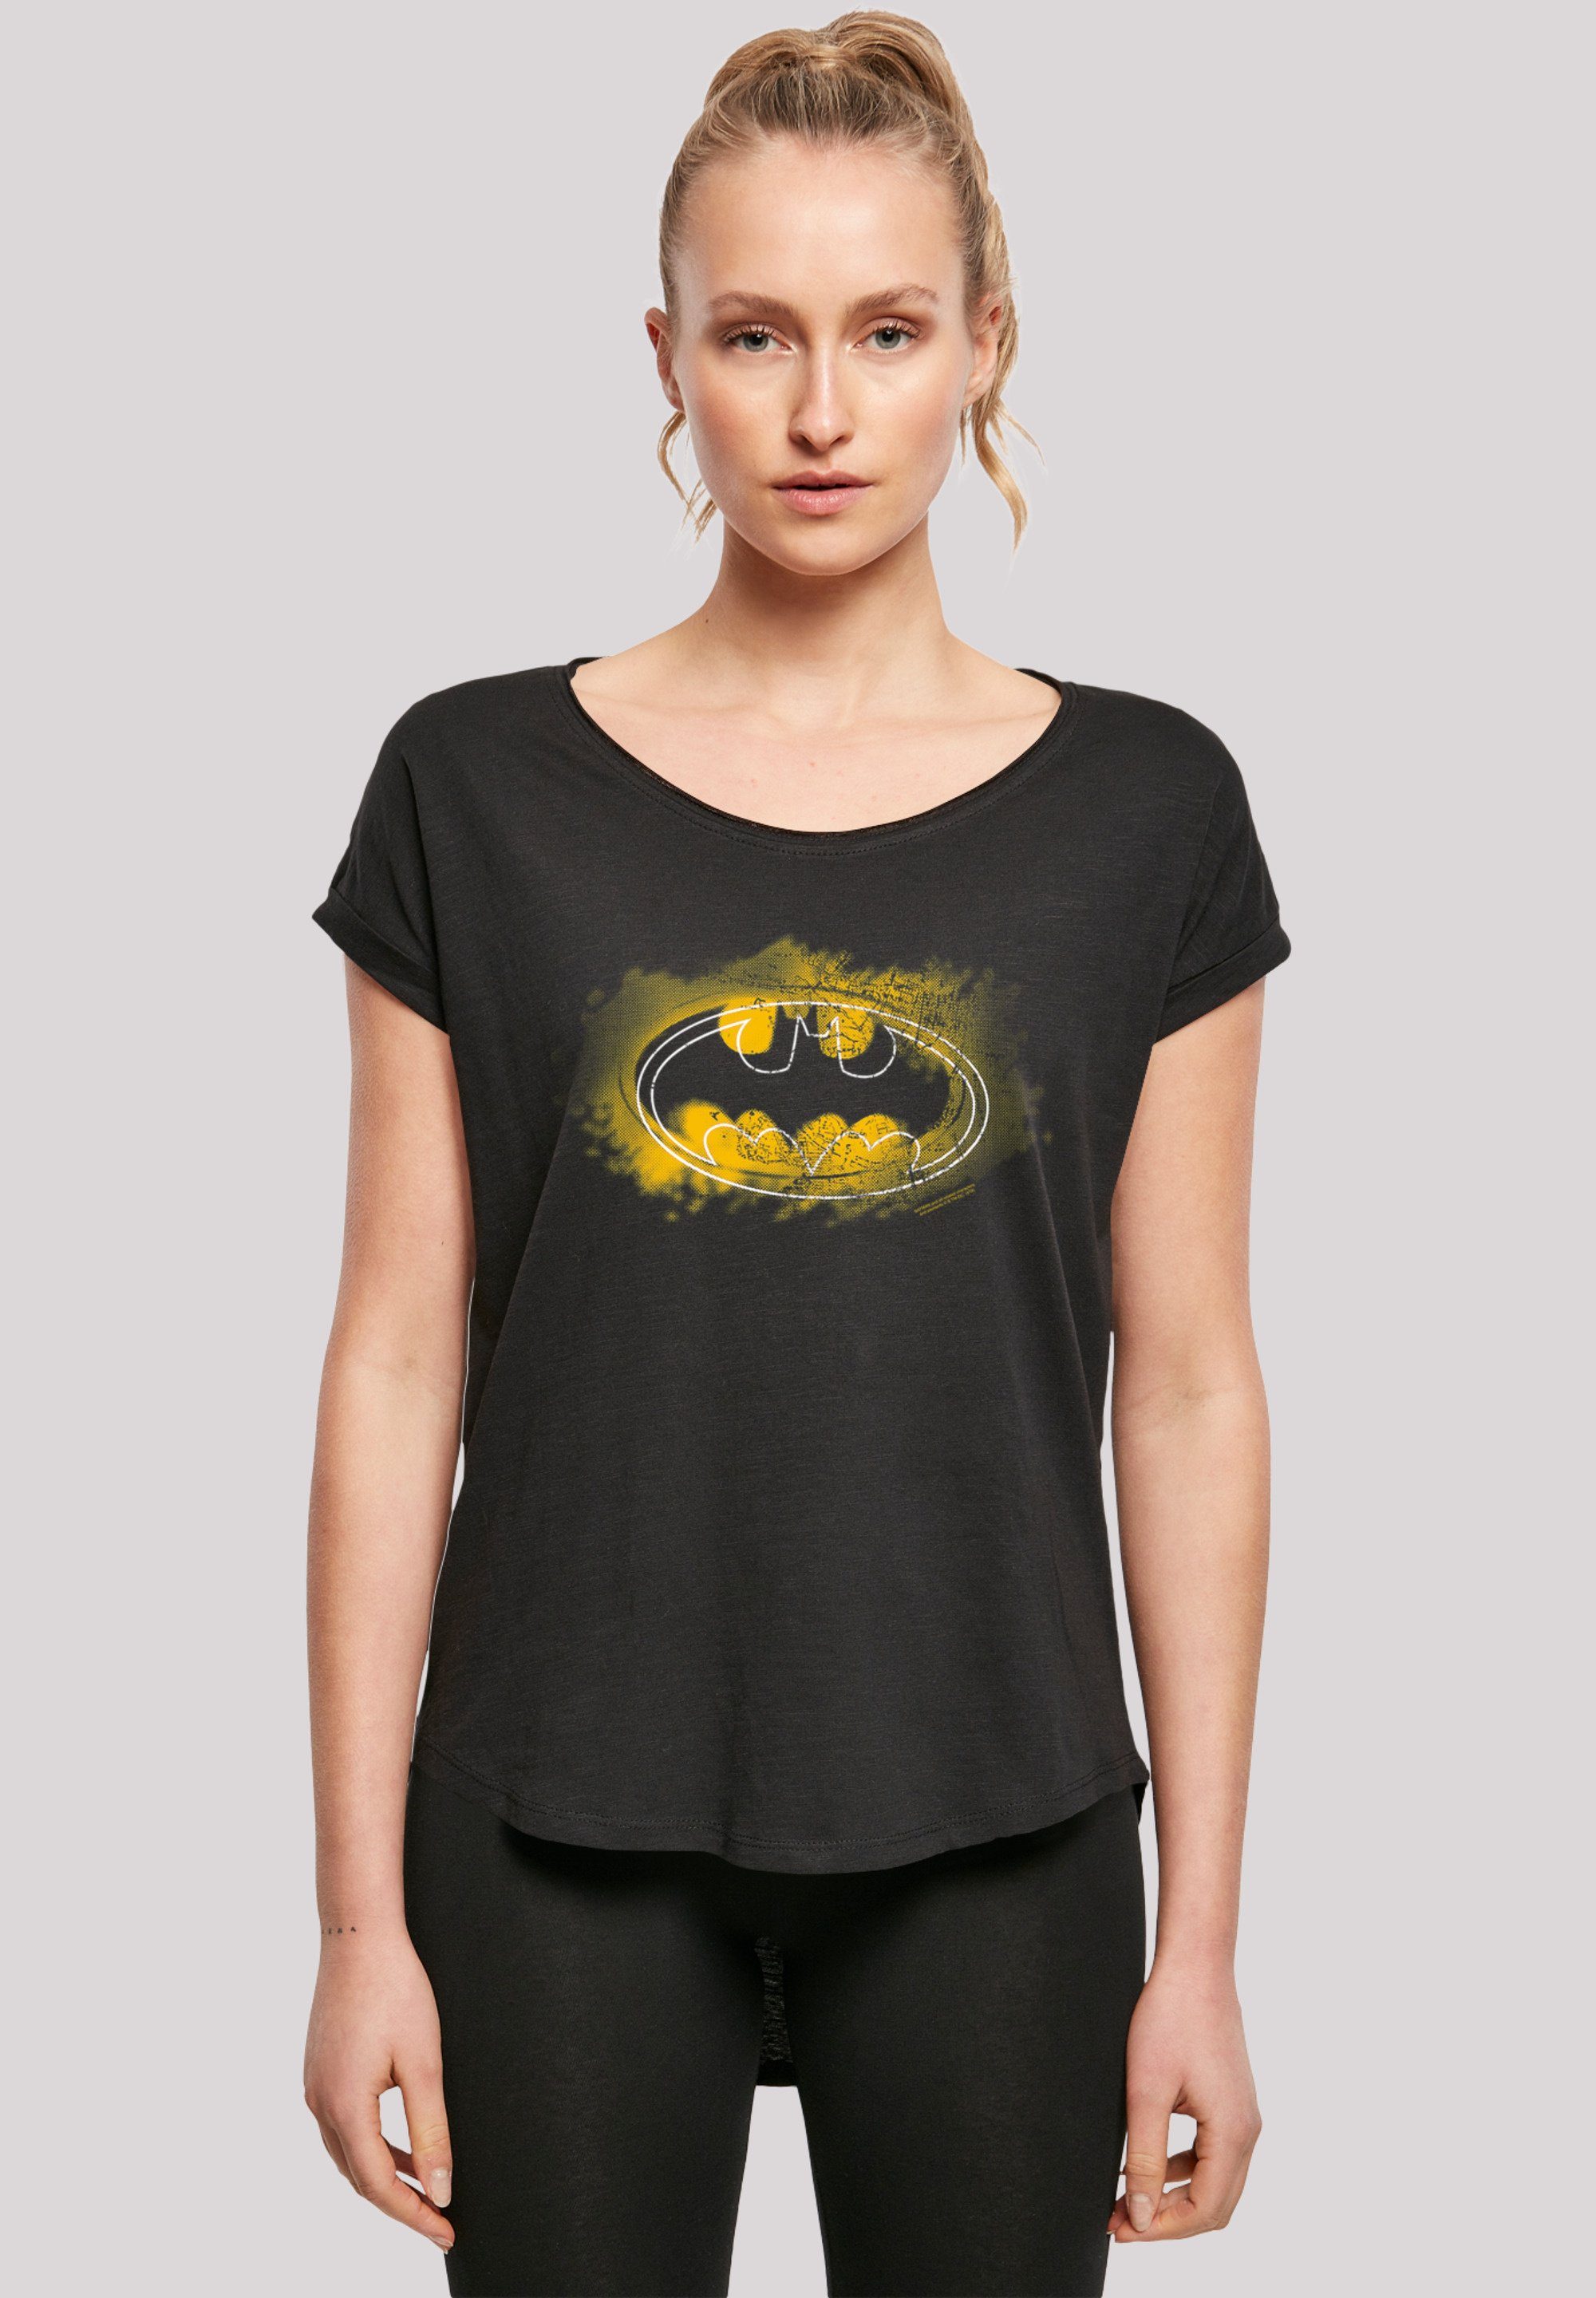 F4NT4STIC T-Shirt DC Comics Batman Spray Logo Print, Sehr weicher  Baumwollstoff mit hohem Tragekomfort | T-Shirts